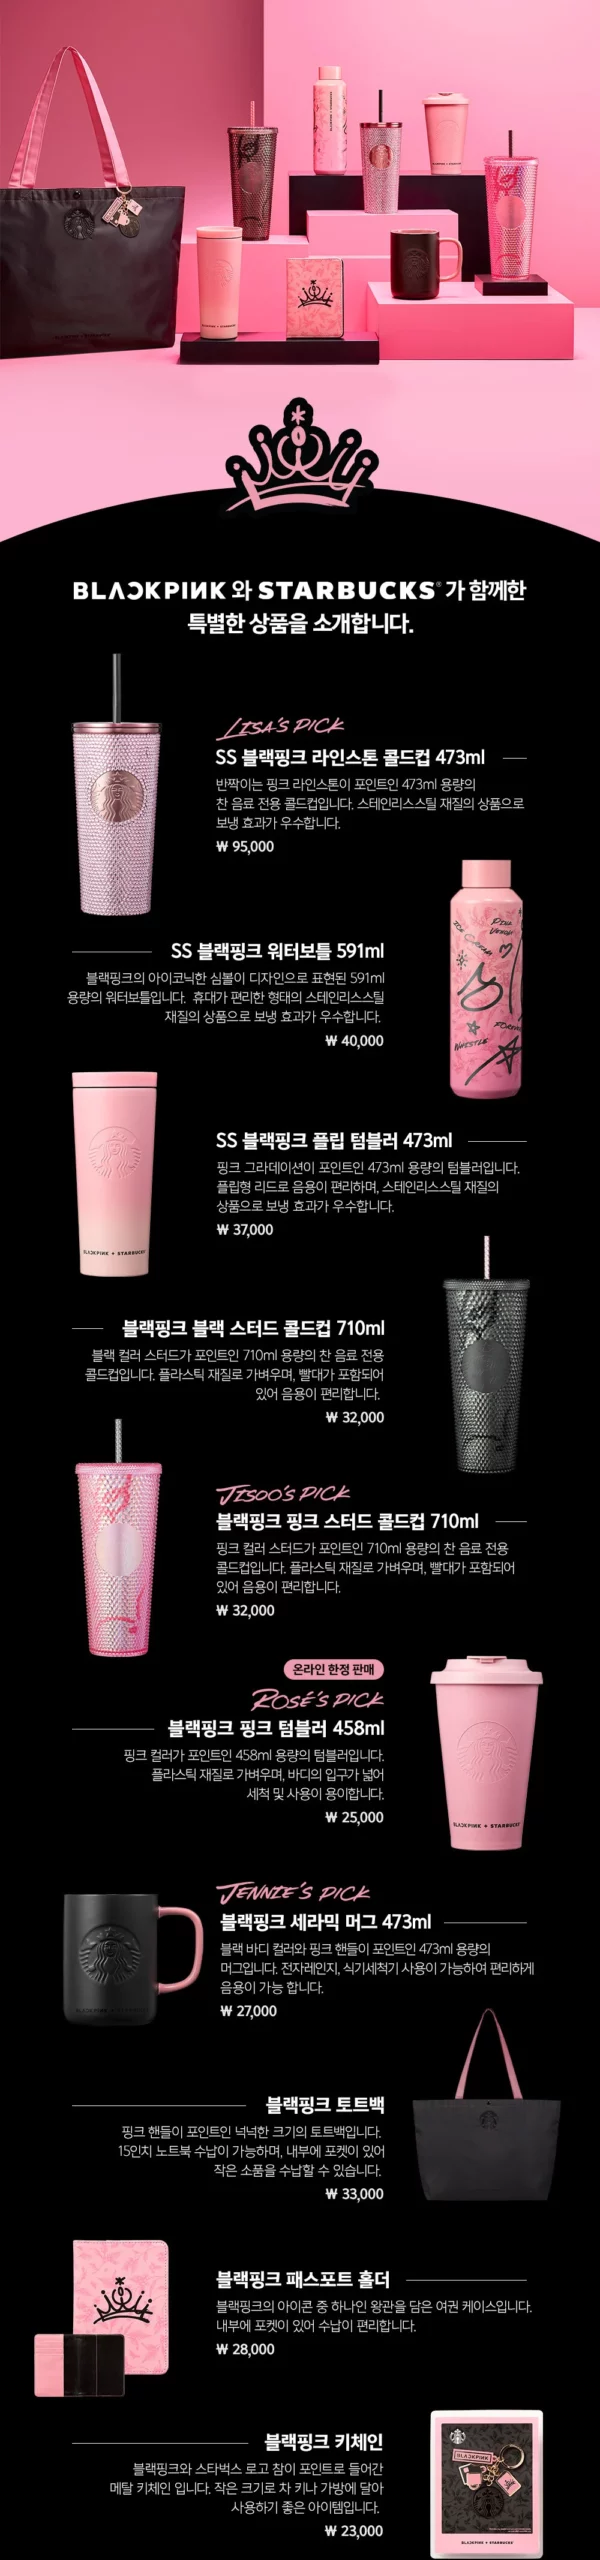 95,000 won, are you crazy?” Starbucks x BLACKPINK collaboration 